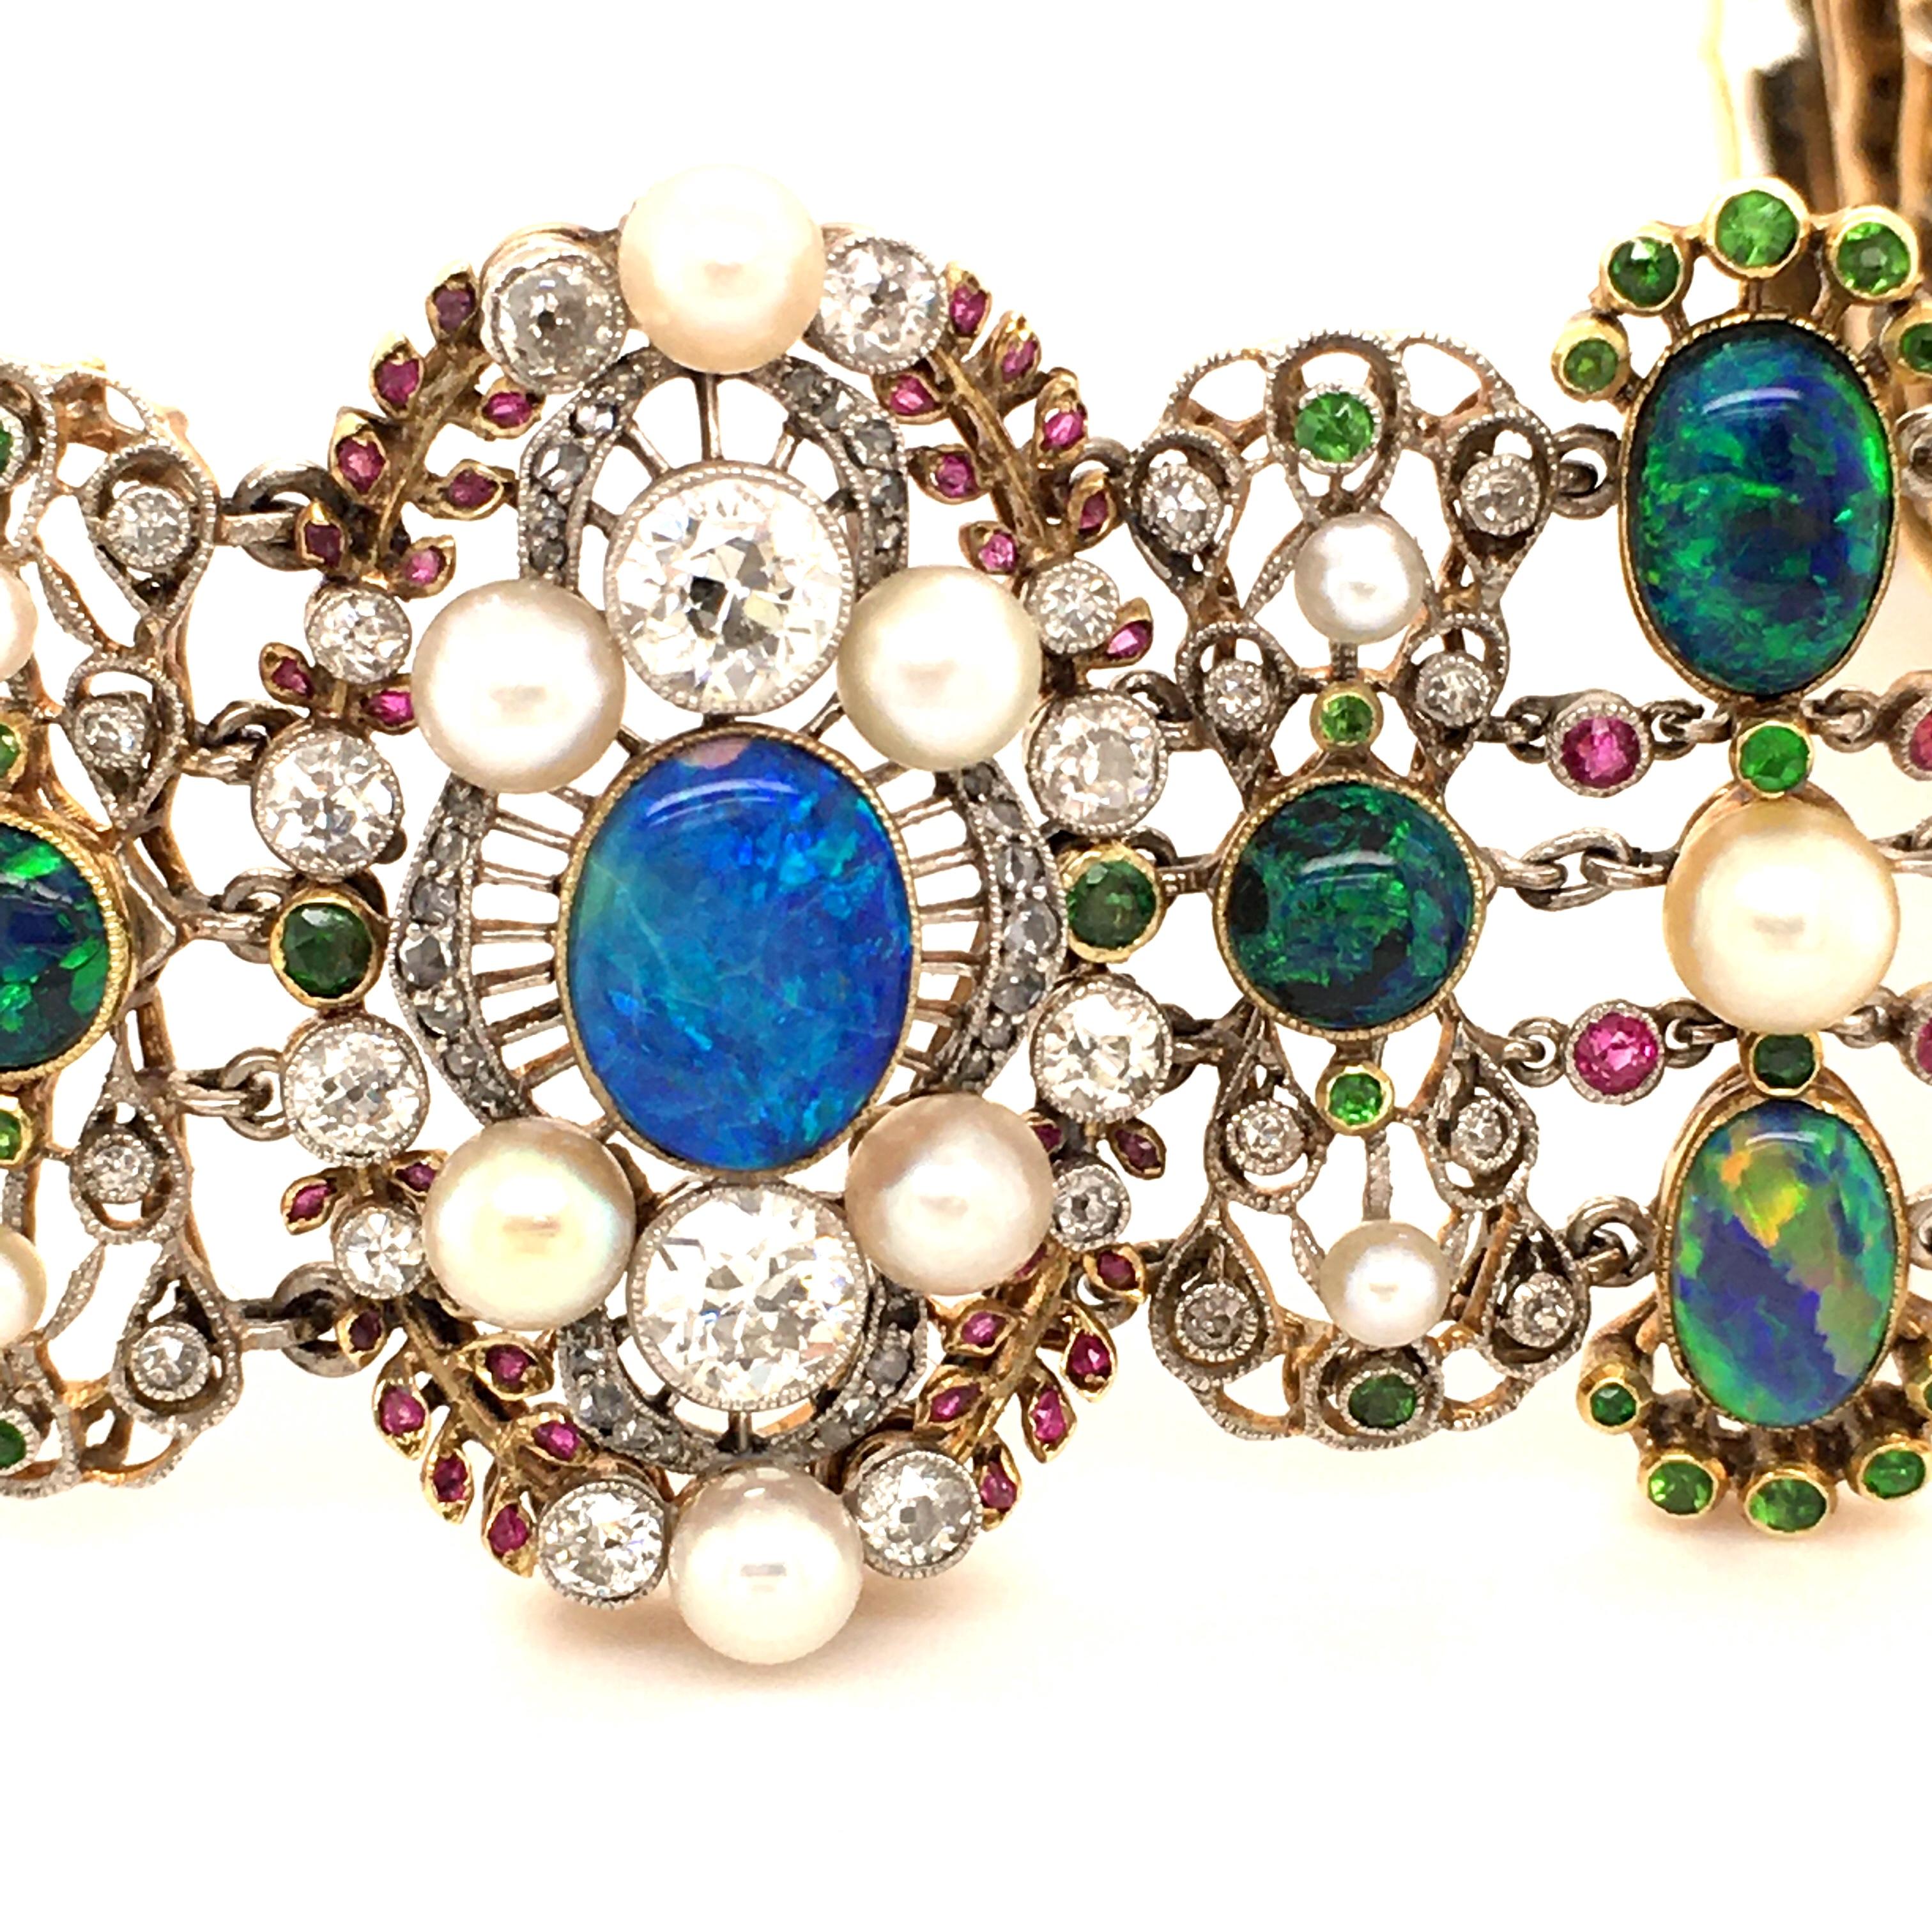 Belle Époque/Art Nouveau Bracelet with Opals, Pearls and Diamonds by Rothmuller For Sale 7